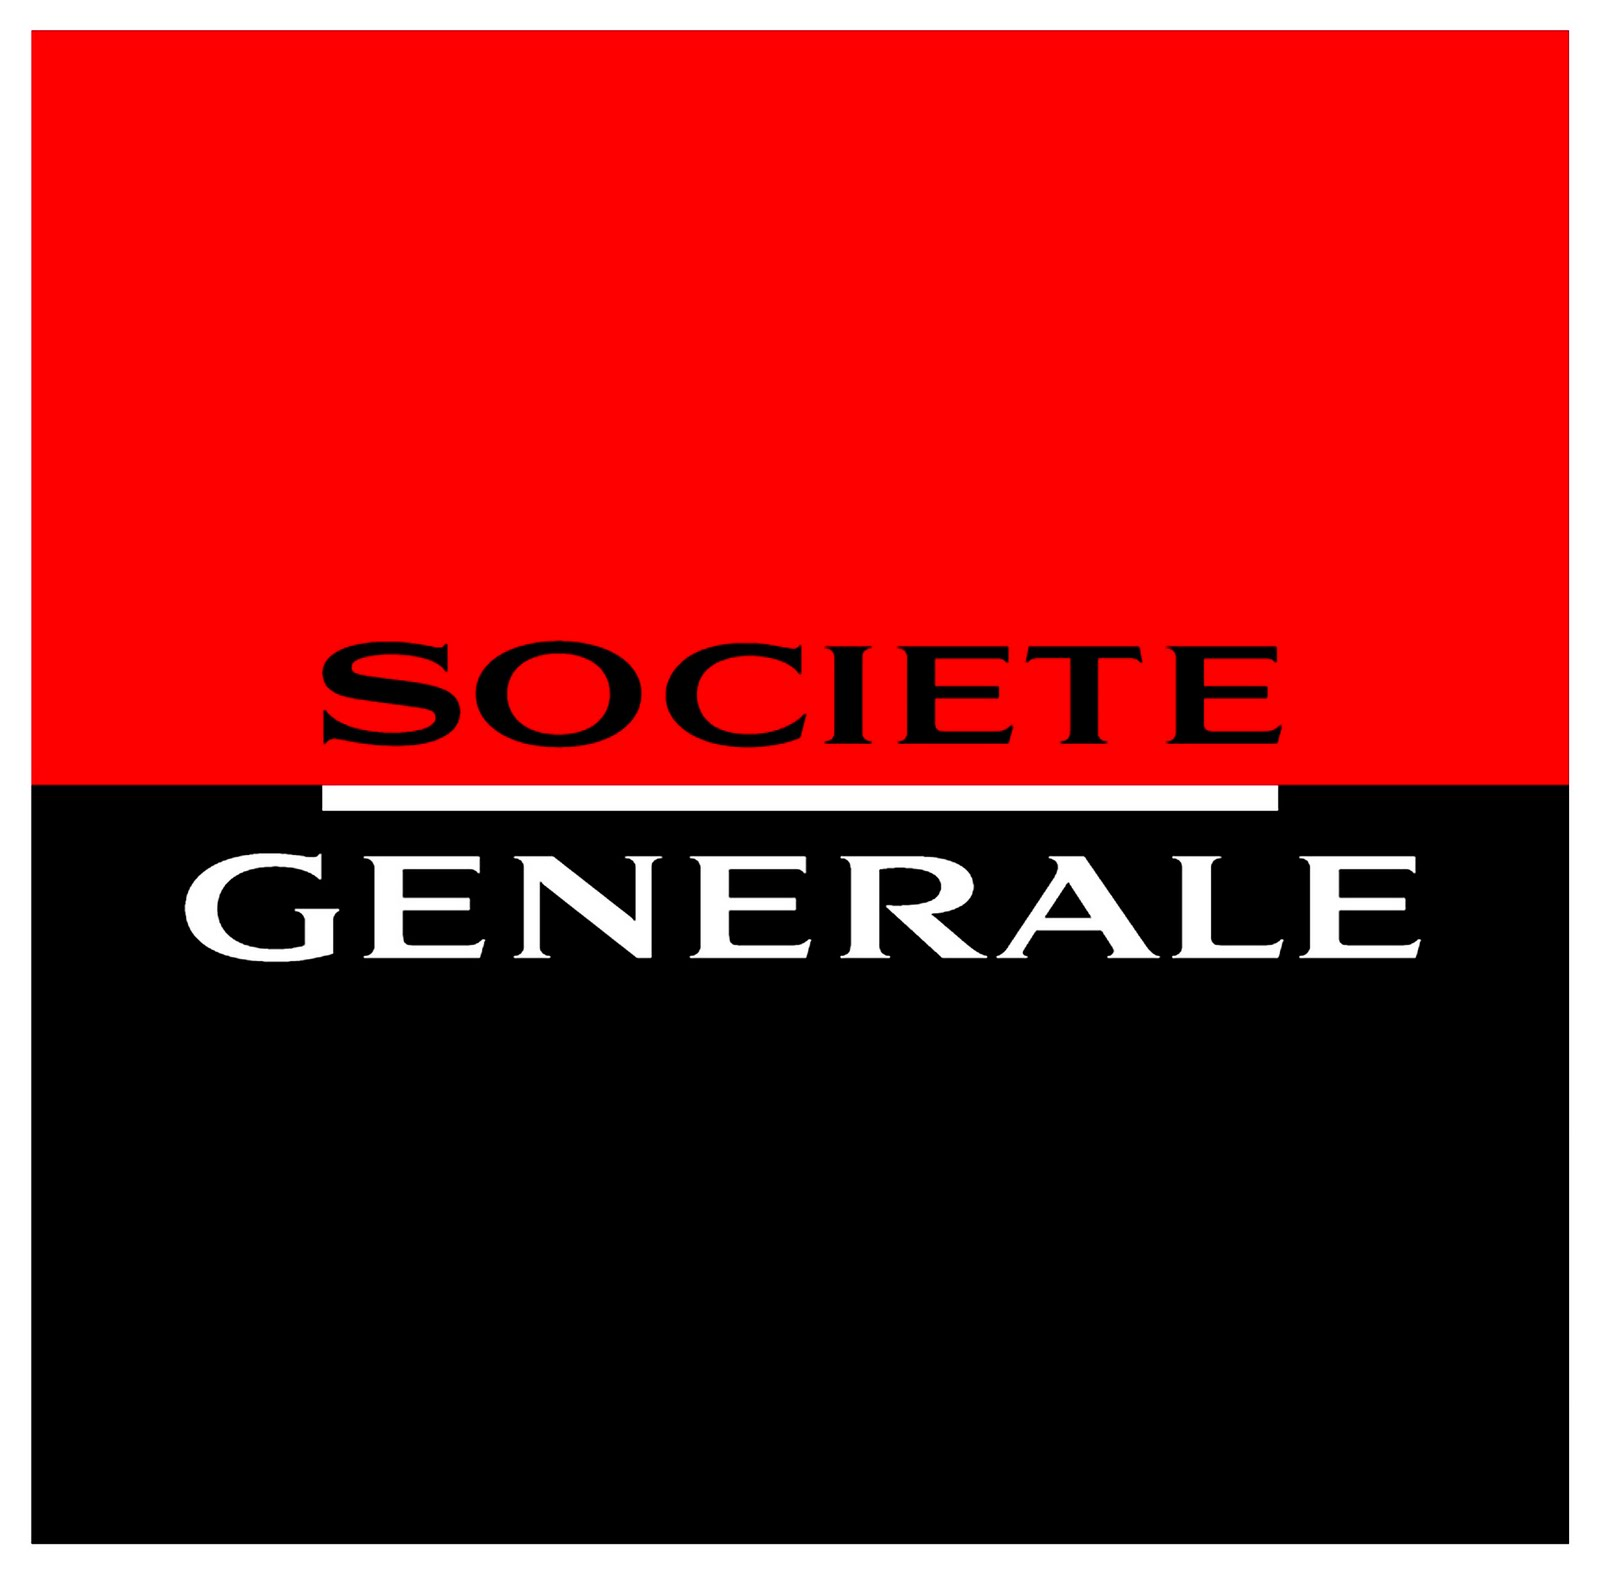 SOCIETE GENERALE